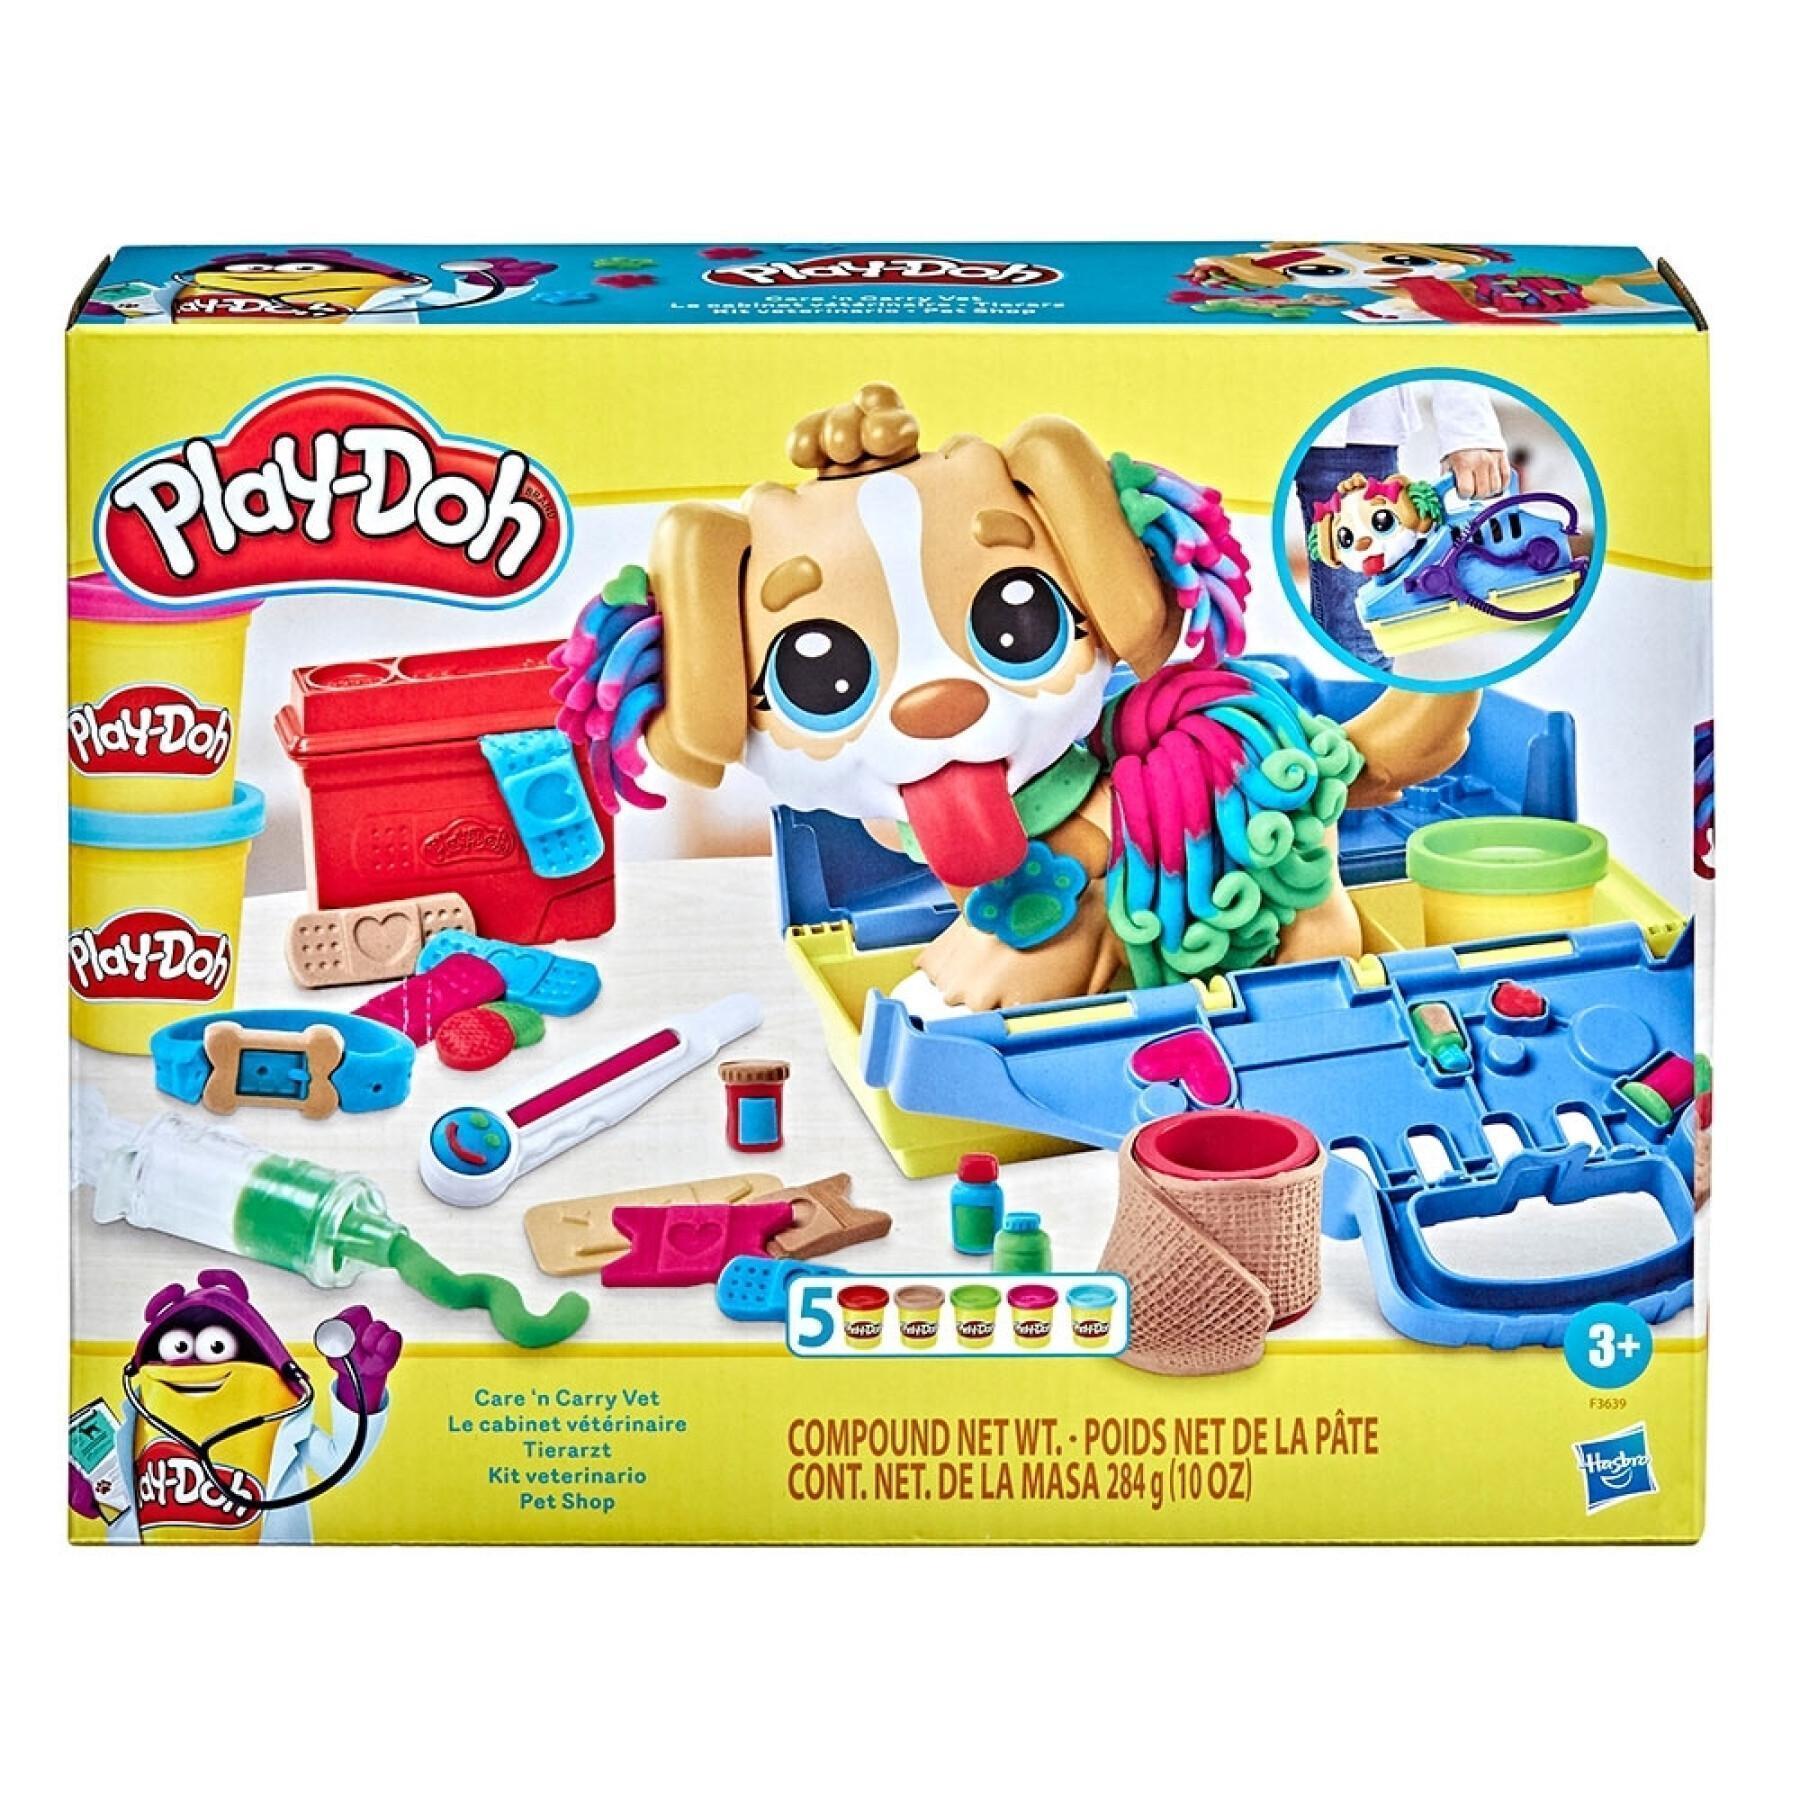 Kit veterinario de plastilina Play Doh